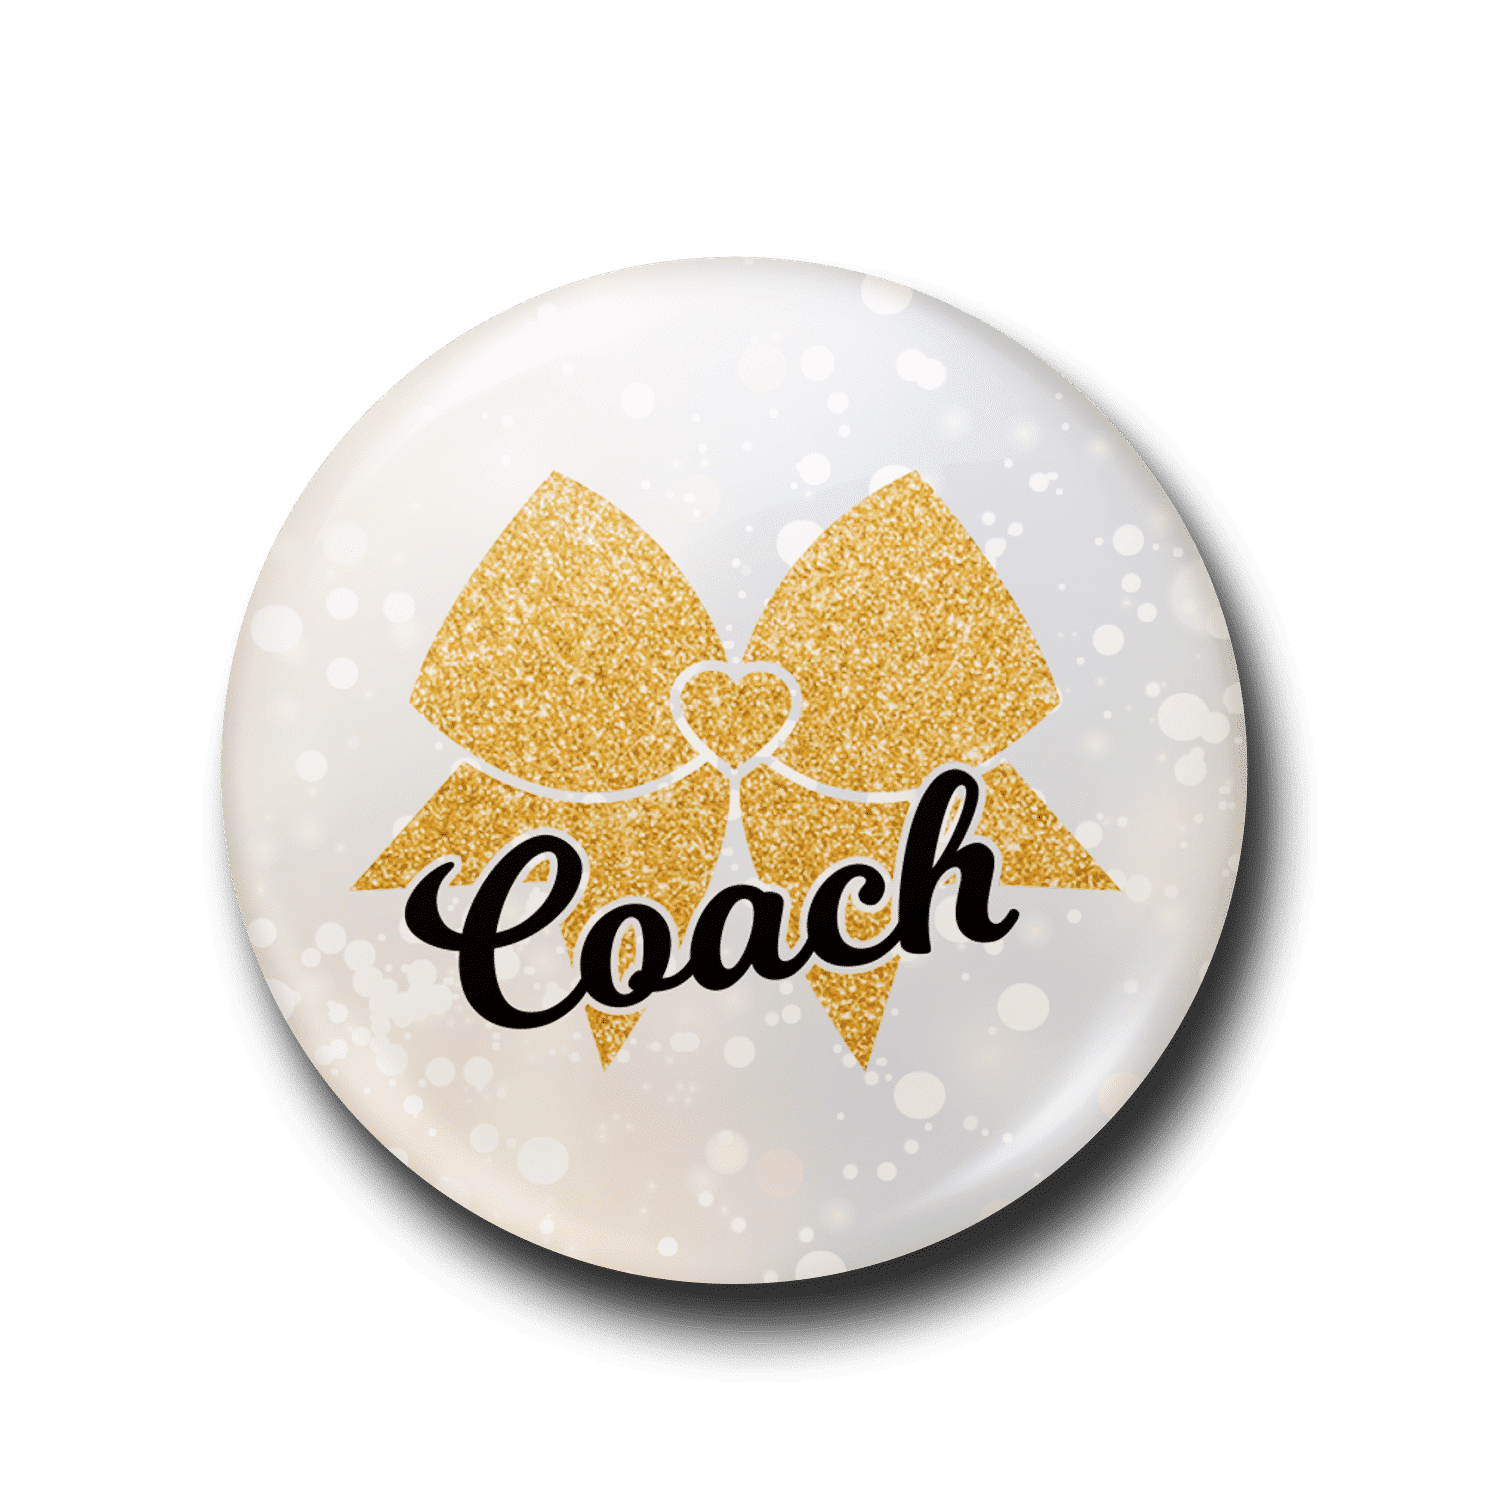 Coach I Love Cheer® Pin Badge - I Love Cheer®